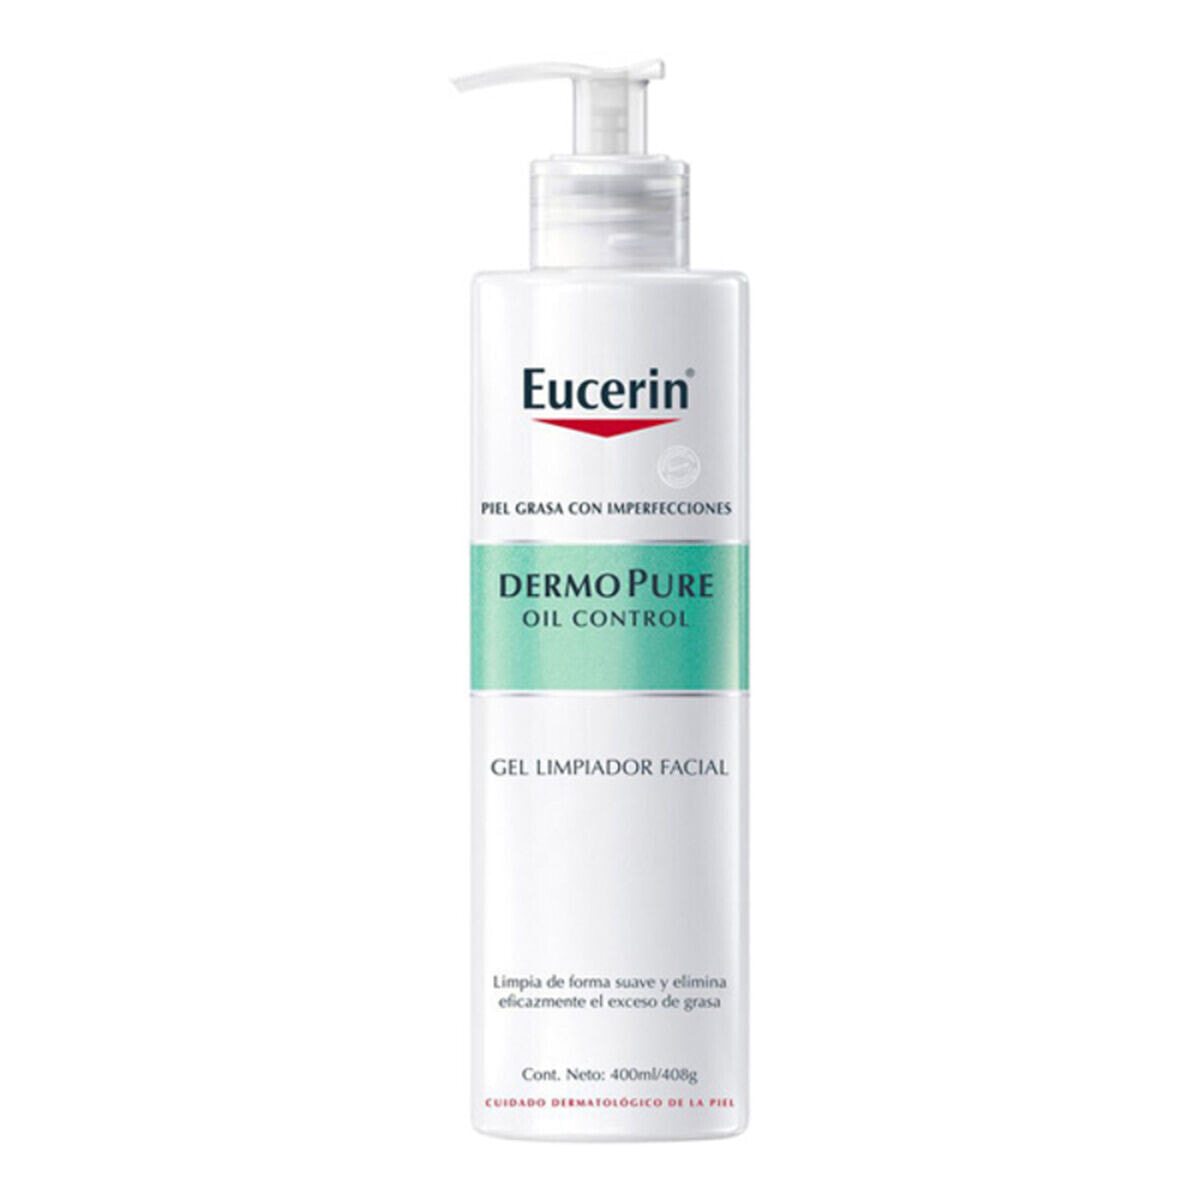 Очищающий гель для лица Dermo Pure Eucerin Dermopure Oil Control (400 ml) 400 ml